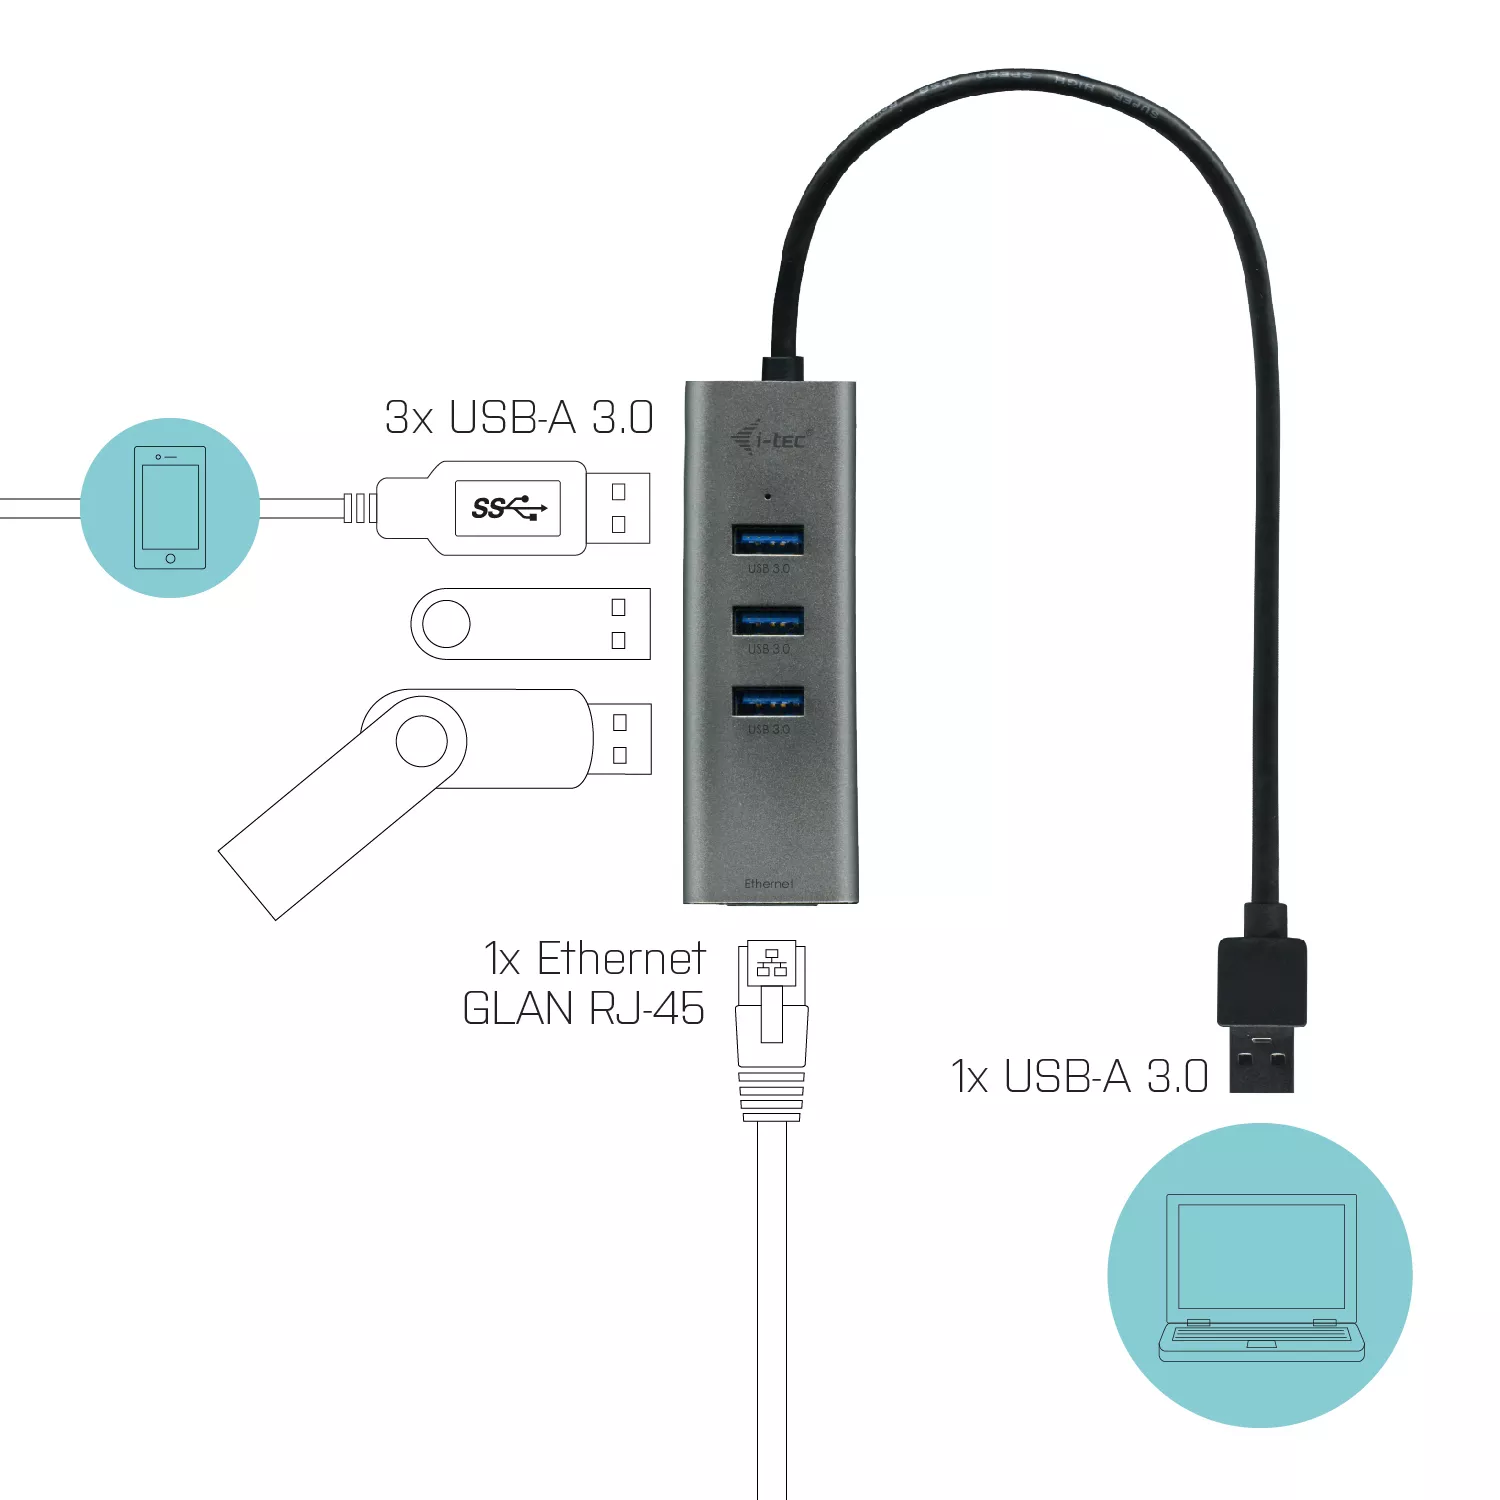 Vente I-TEC USB 3.0 Metal 3-Port HUB with Gigabit i-tec au meilleur prix - visuel 4